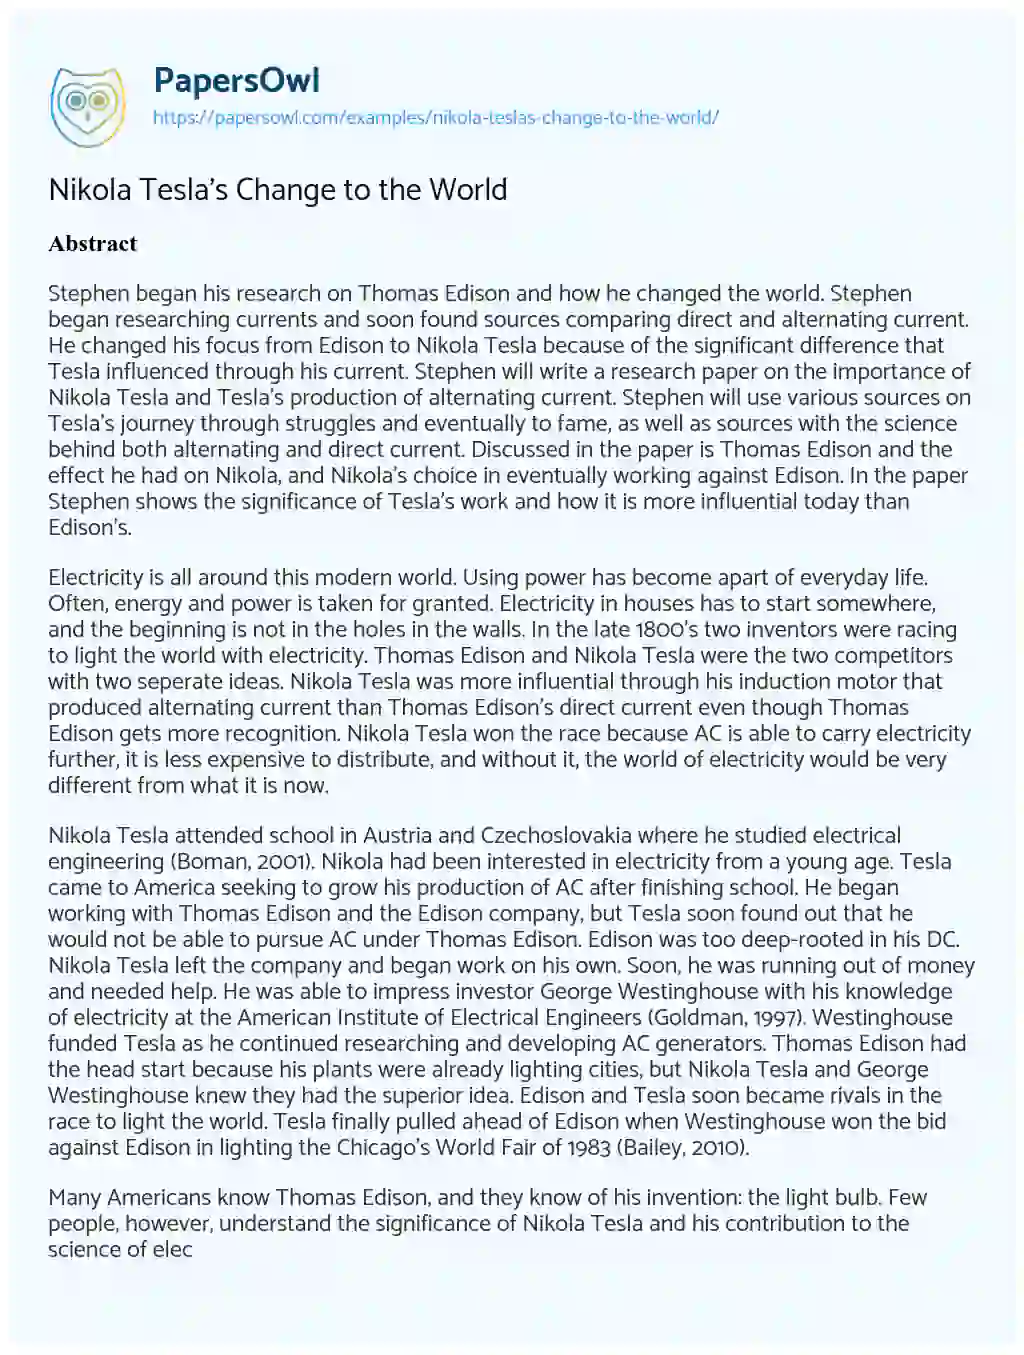 Essay on Nikola Tesla’s Change to the World